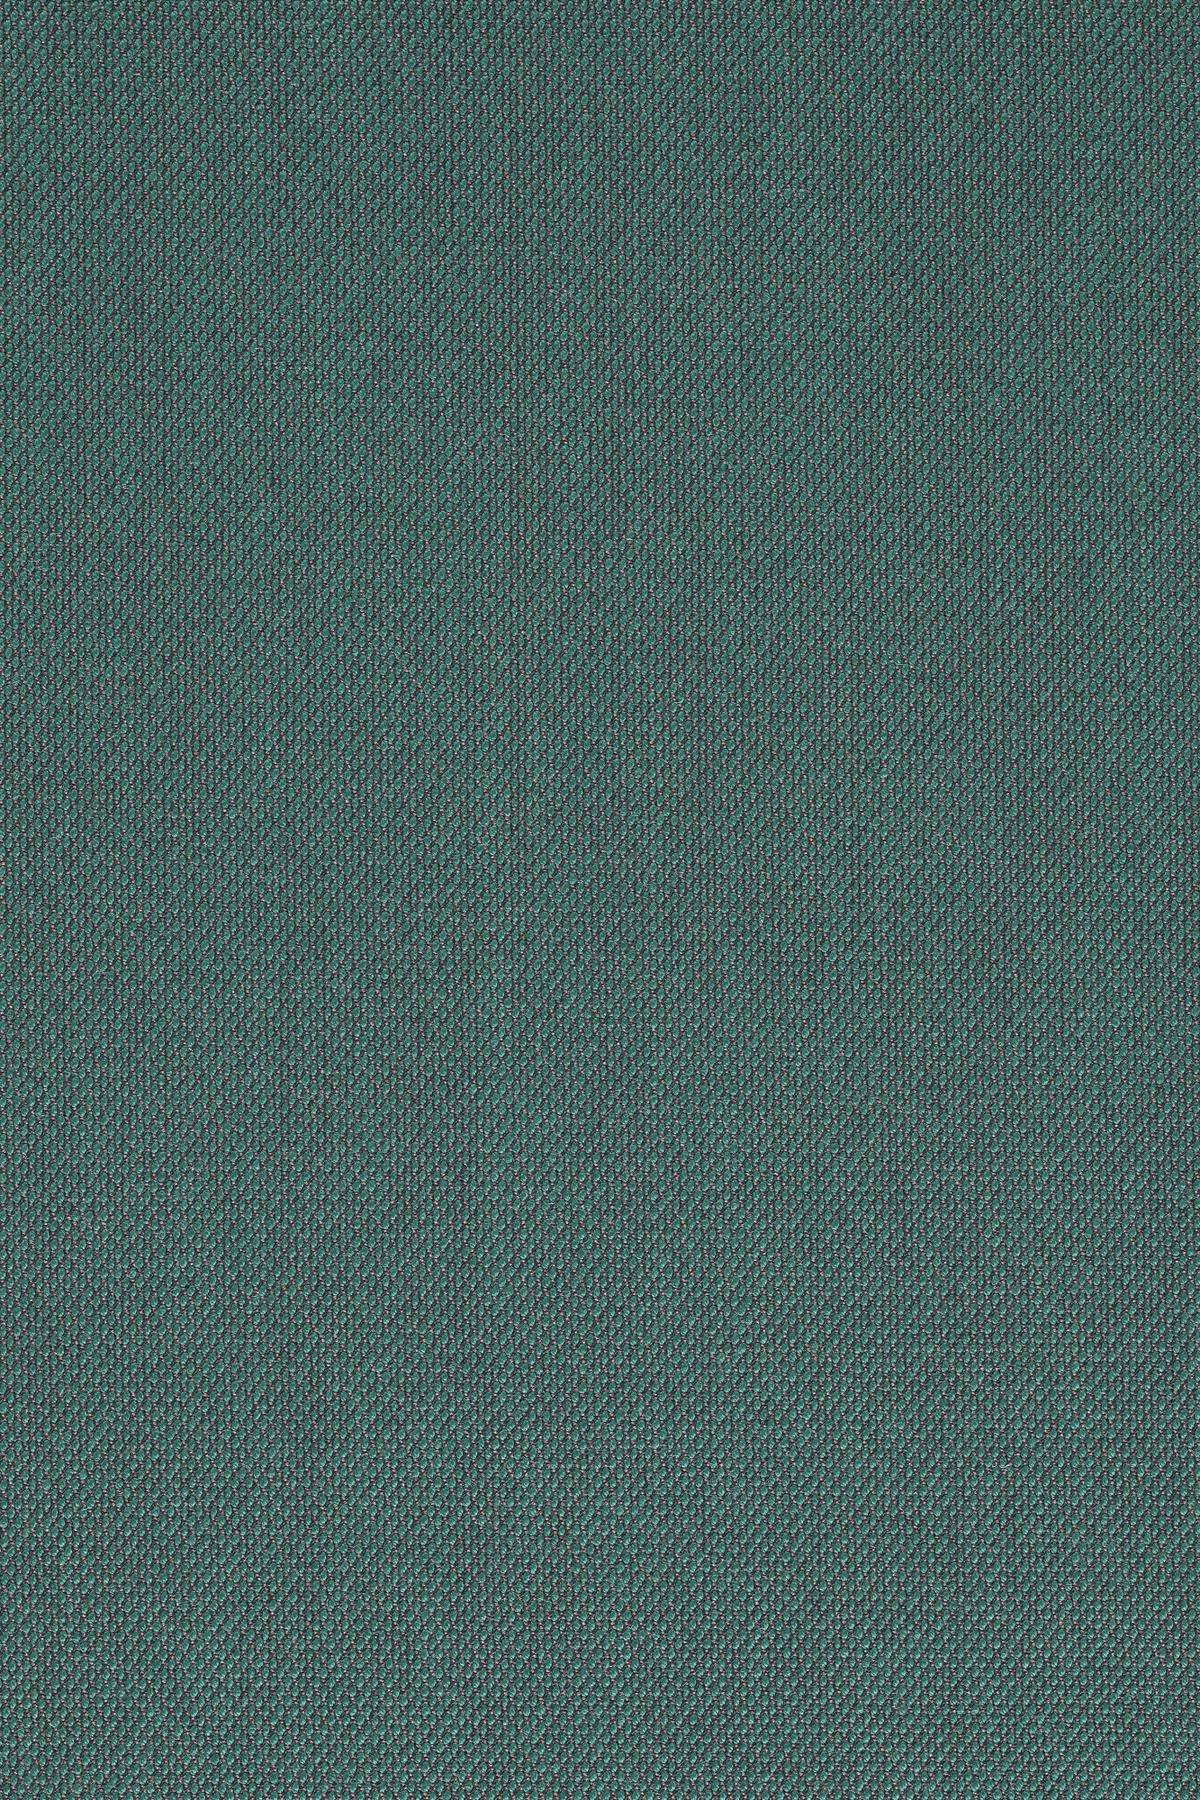 Fabric sample Steelcut Trio 3 996 blue